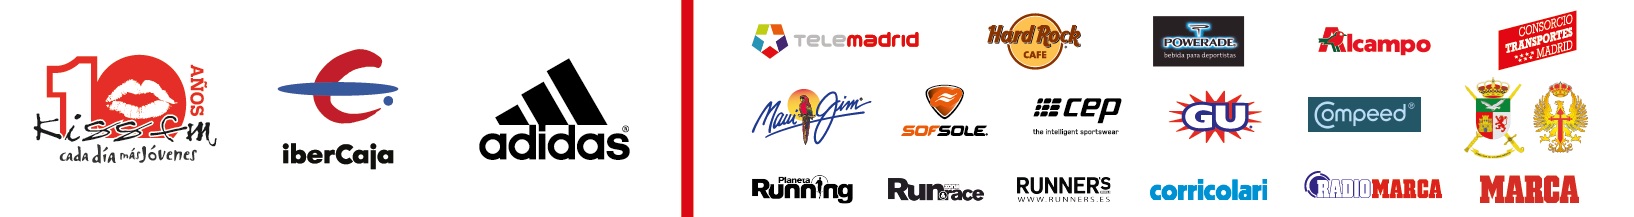 Rock 'n' Roll Madrid Maratn 2012 - 10 Km